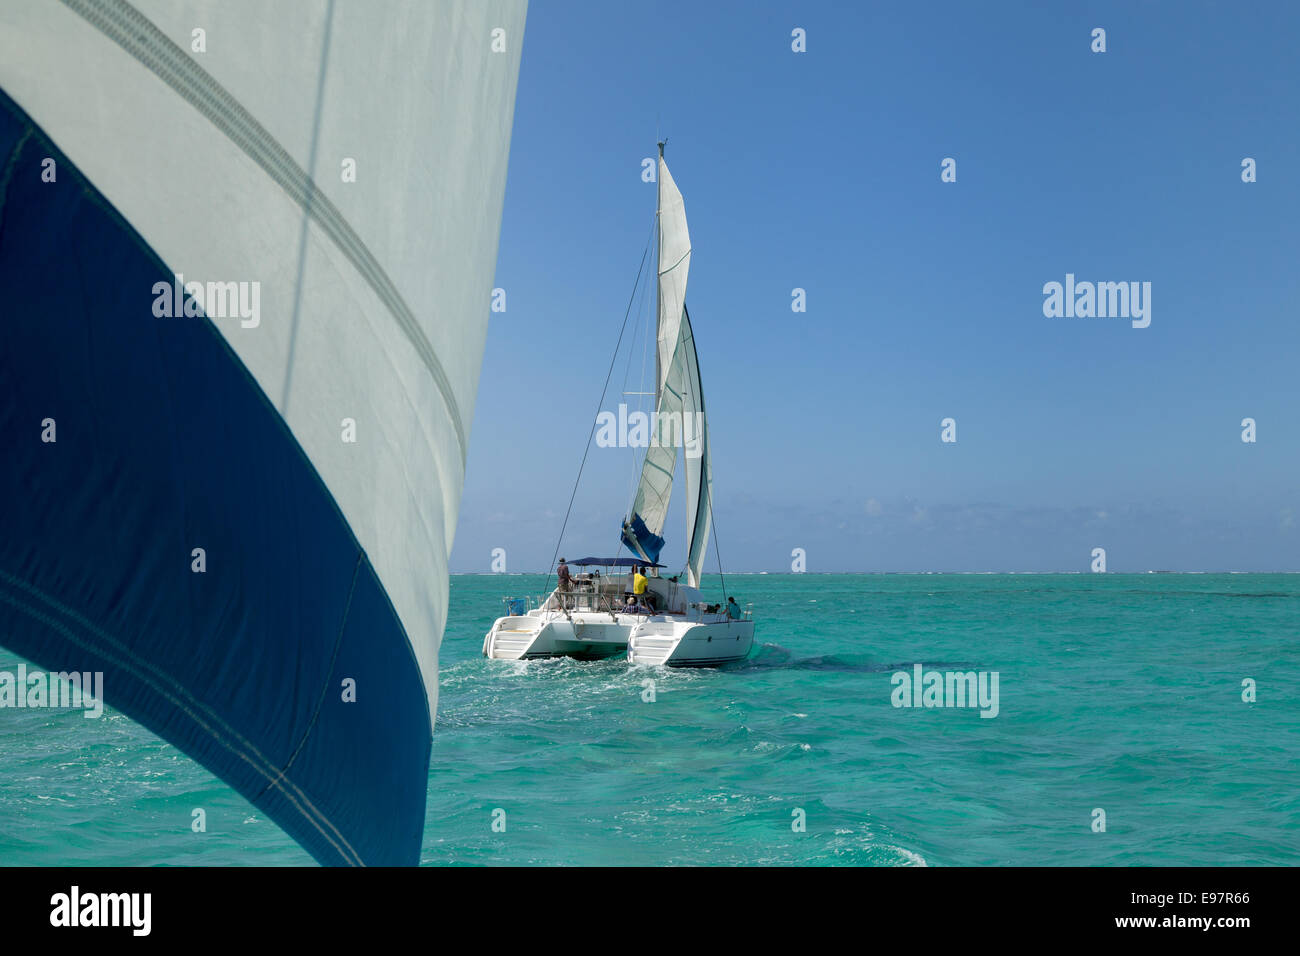 Catamarans_under_sail_in_the_Indian_Ocea